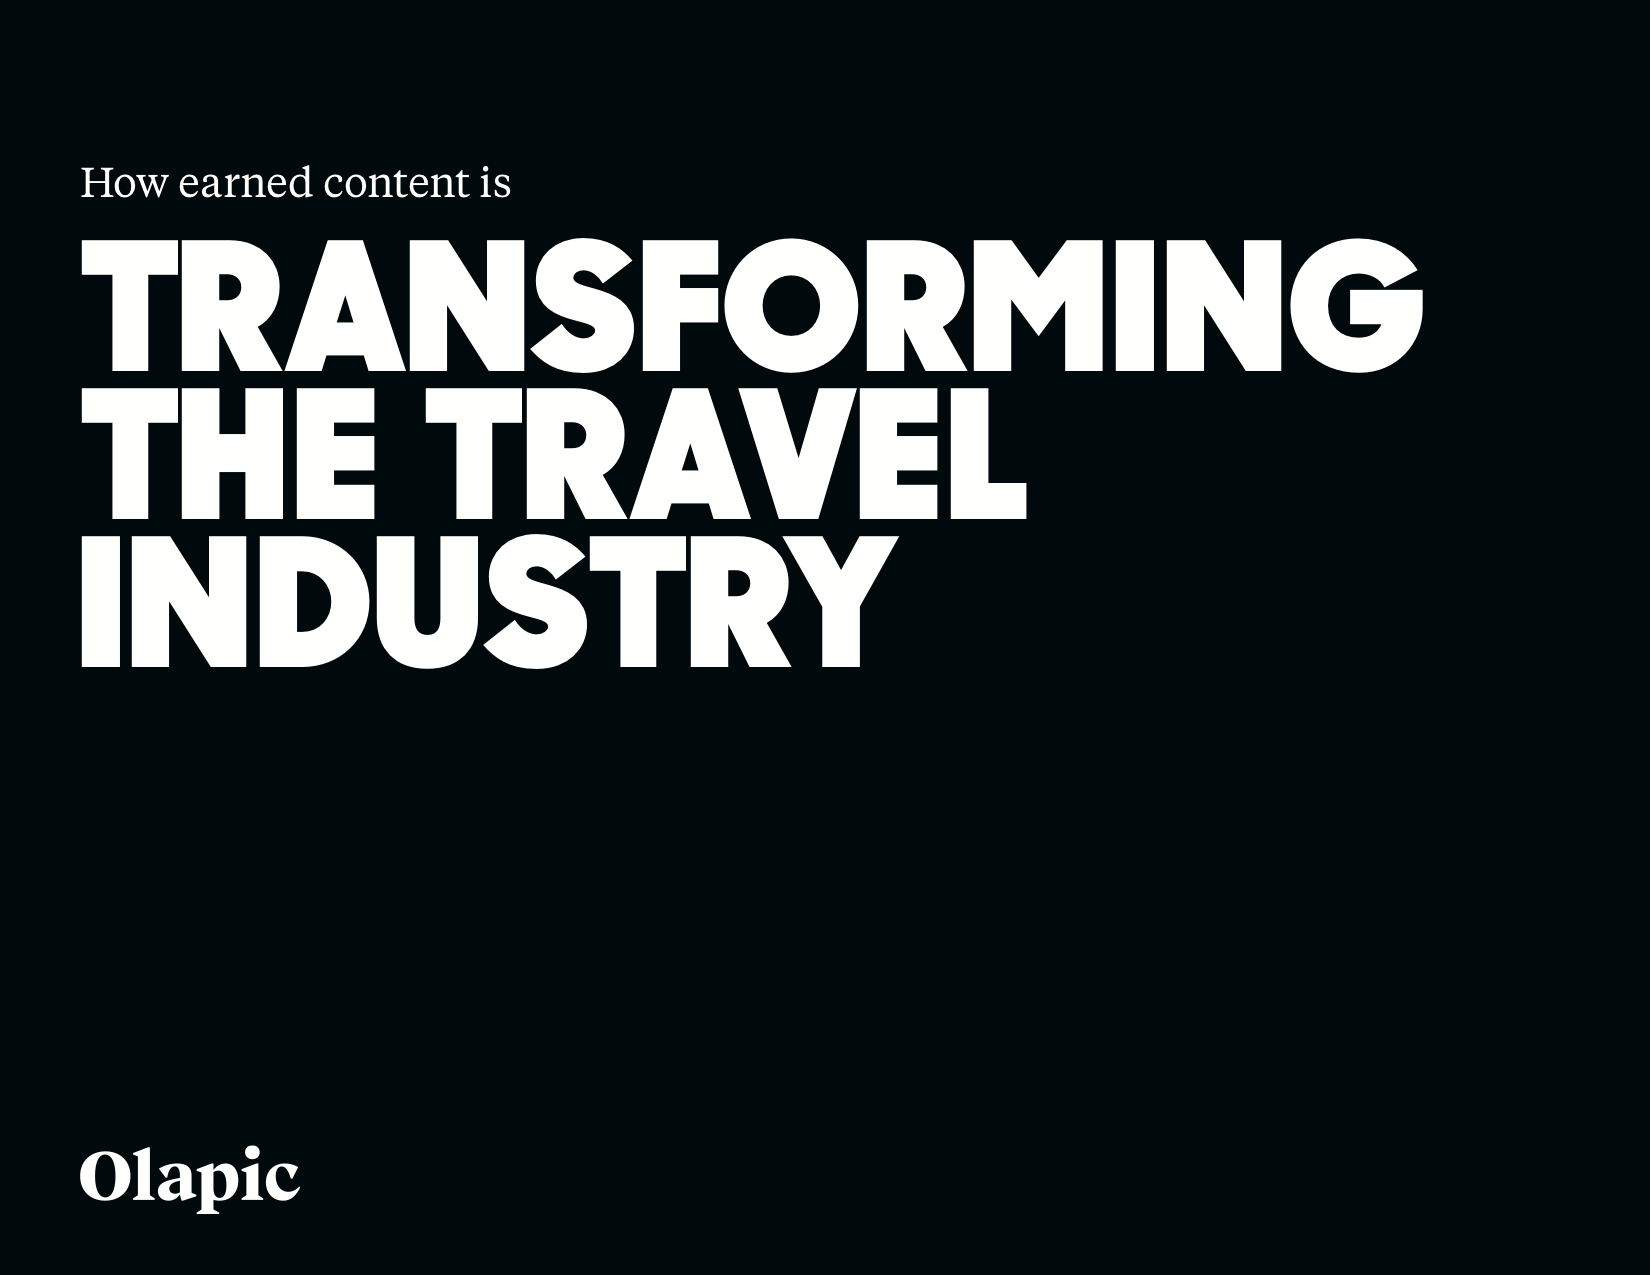 Transforming-The-Travel-Industry-2016.jpg